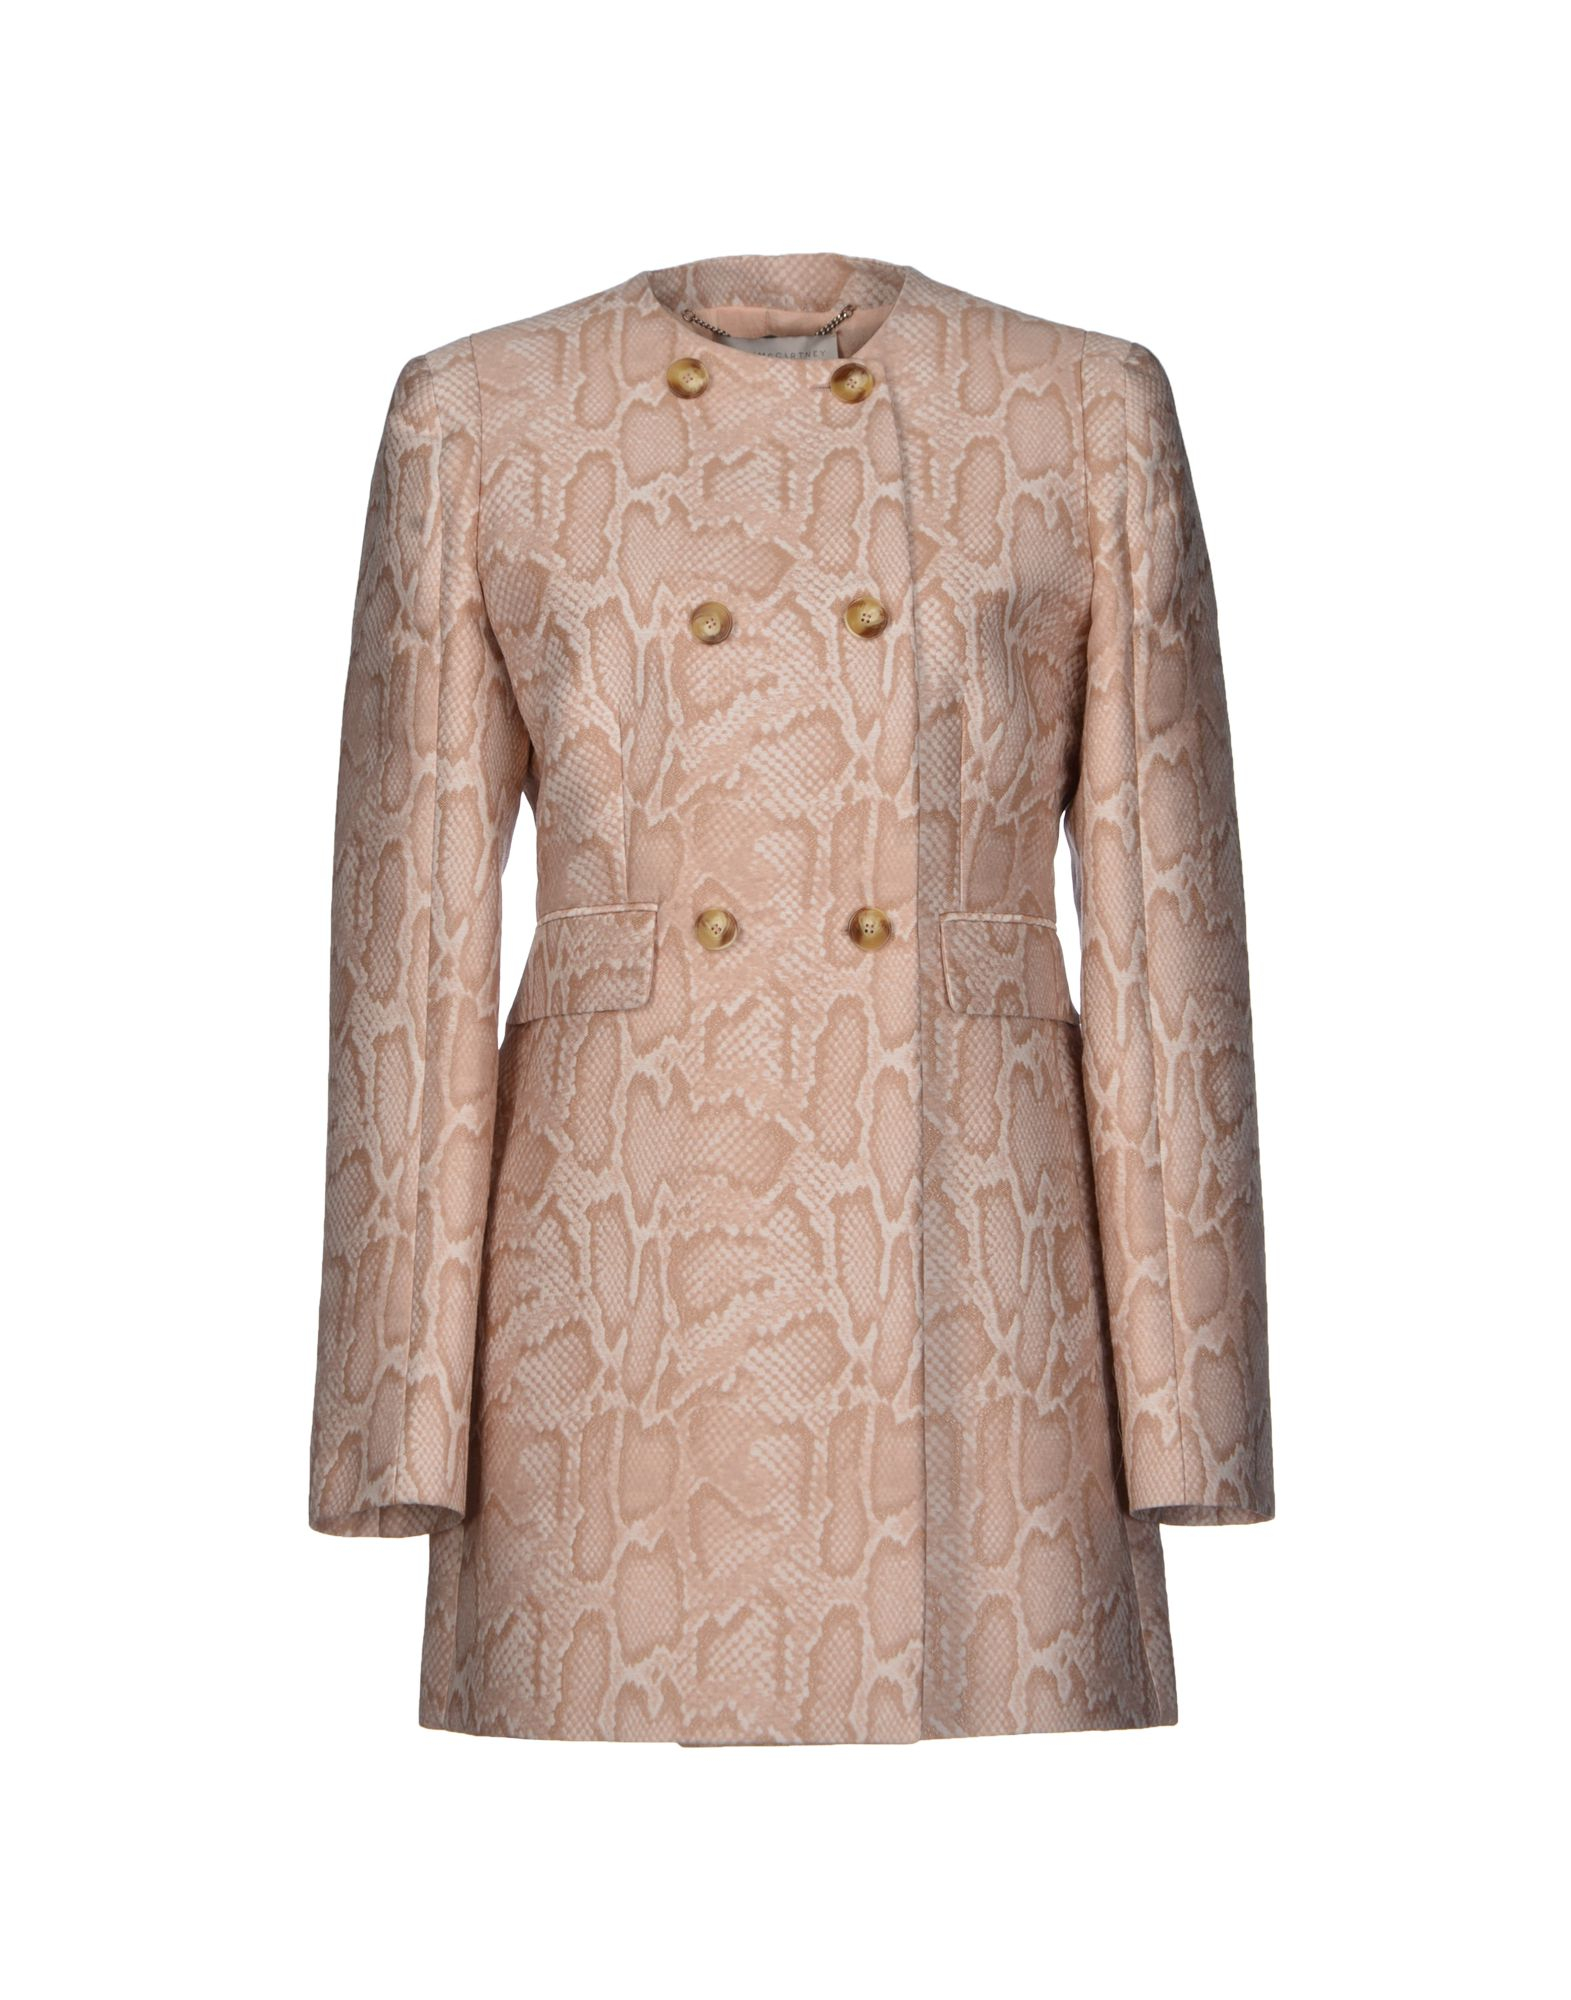 Stella mccartney Coat in Pink (Light pink) | Lyst